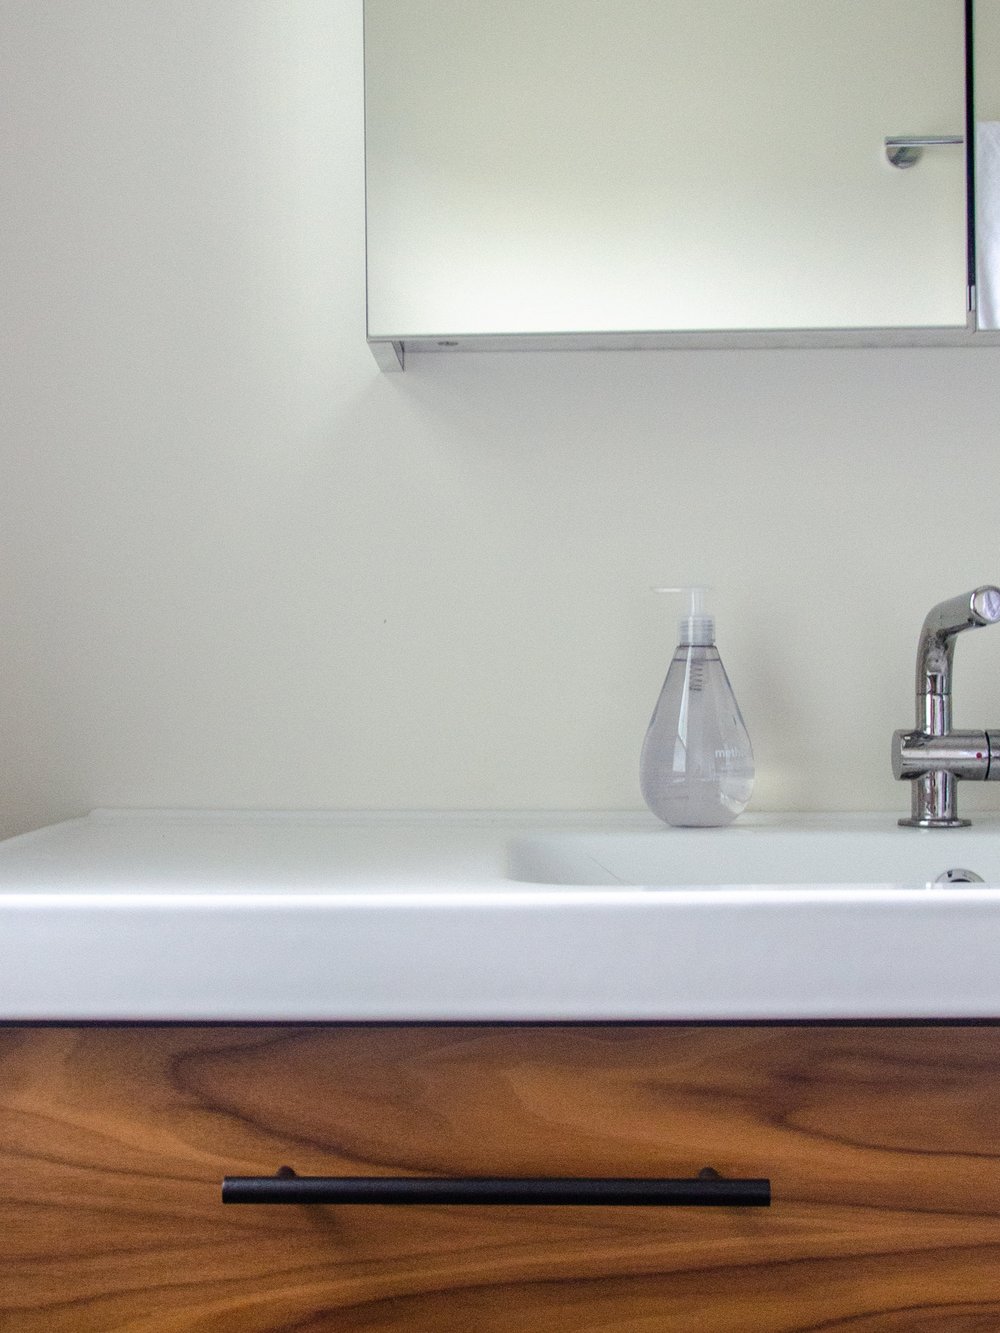 Ikea Morgon Bathroom Vanity And, Ikea Mirrored Bathroom Cabinet Uk